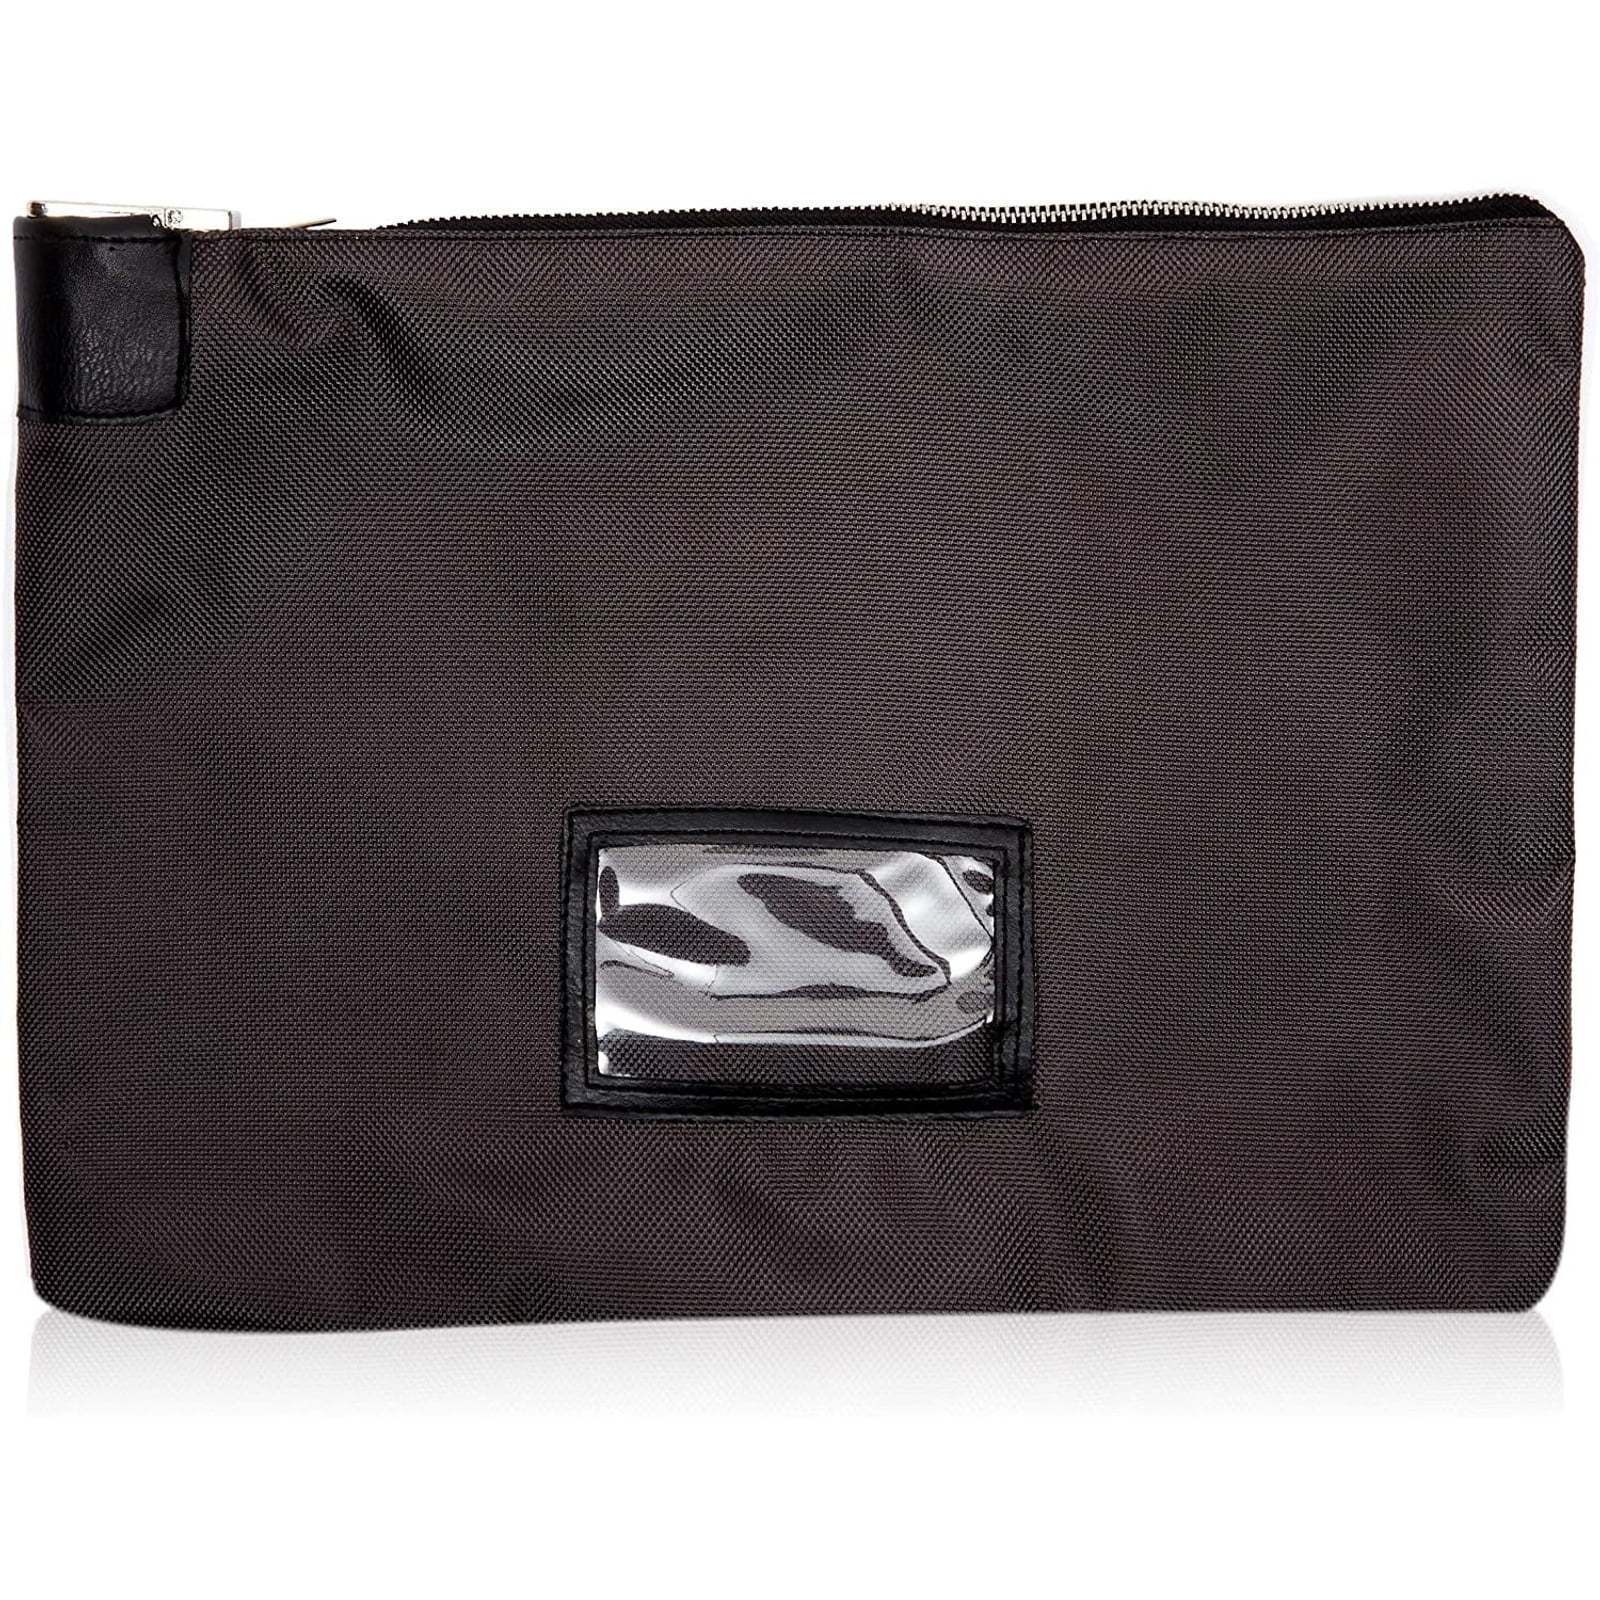 4PCS Canvas Tool Bags with Metal Zippers Multi Purpose Waterproof Smart Storage 